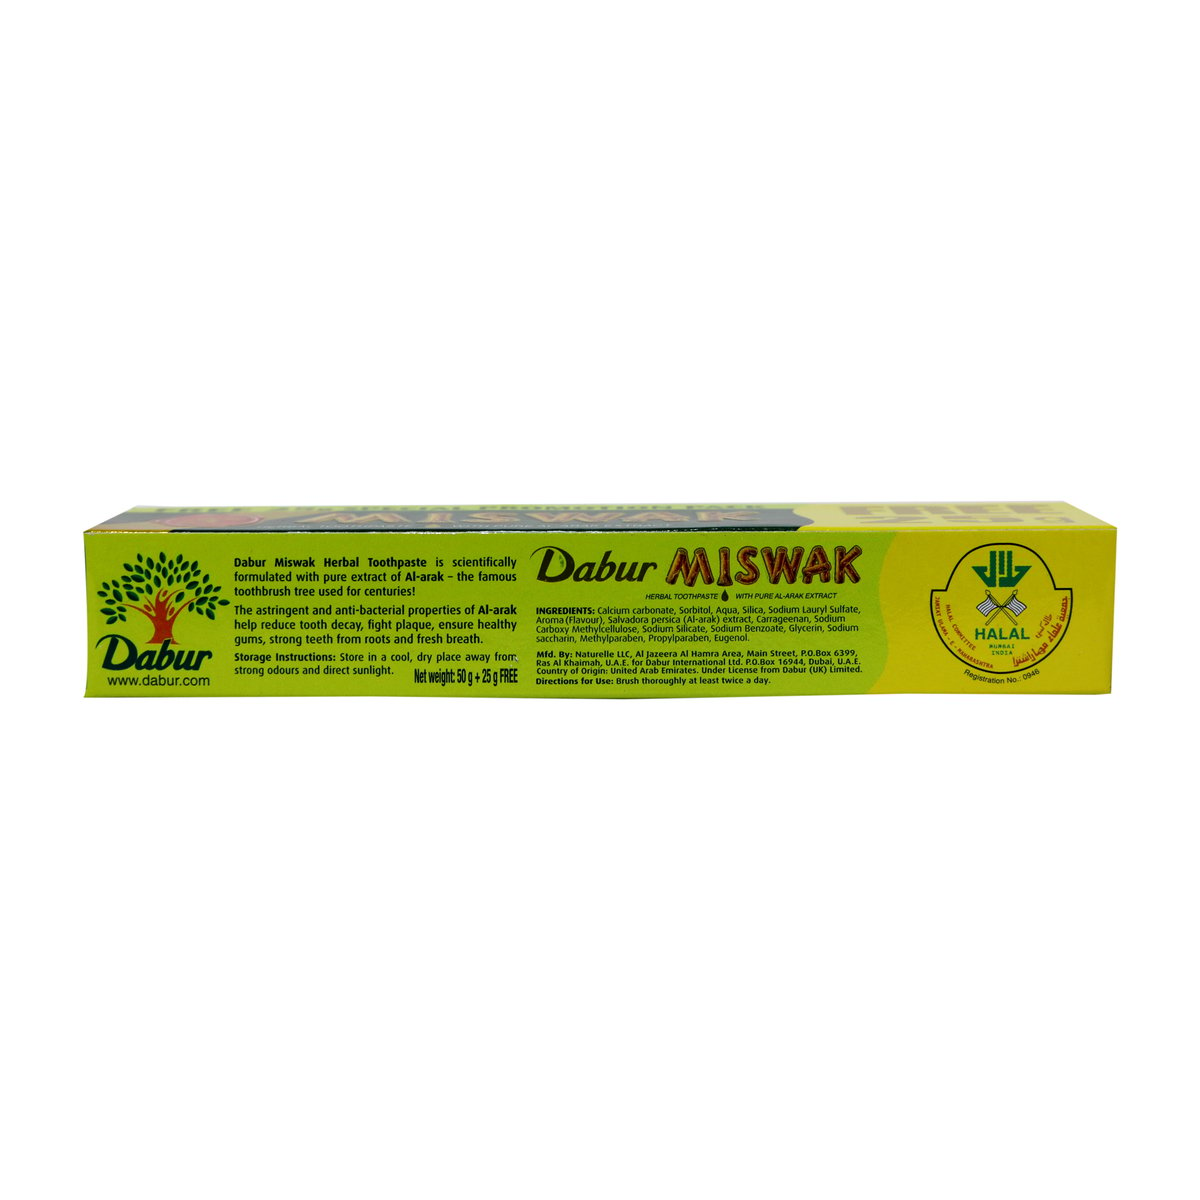 Dabur Miswak Herbal Tooth Paste 50g+25g